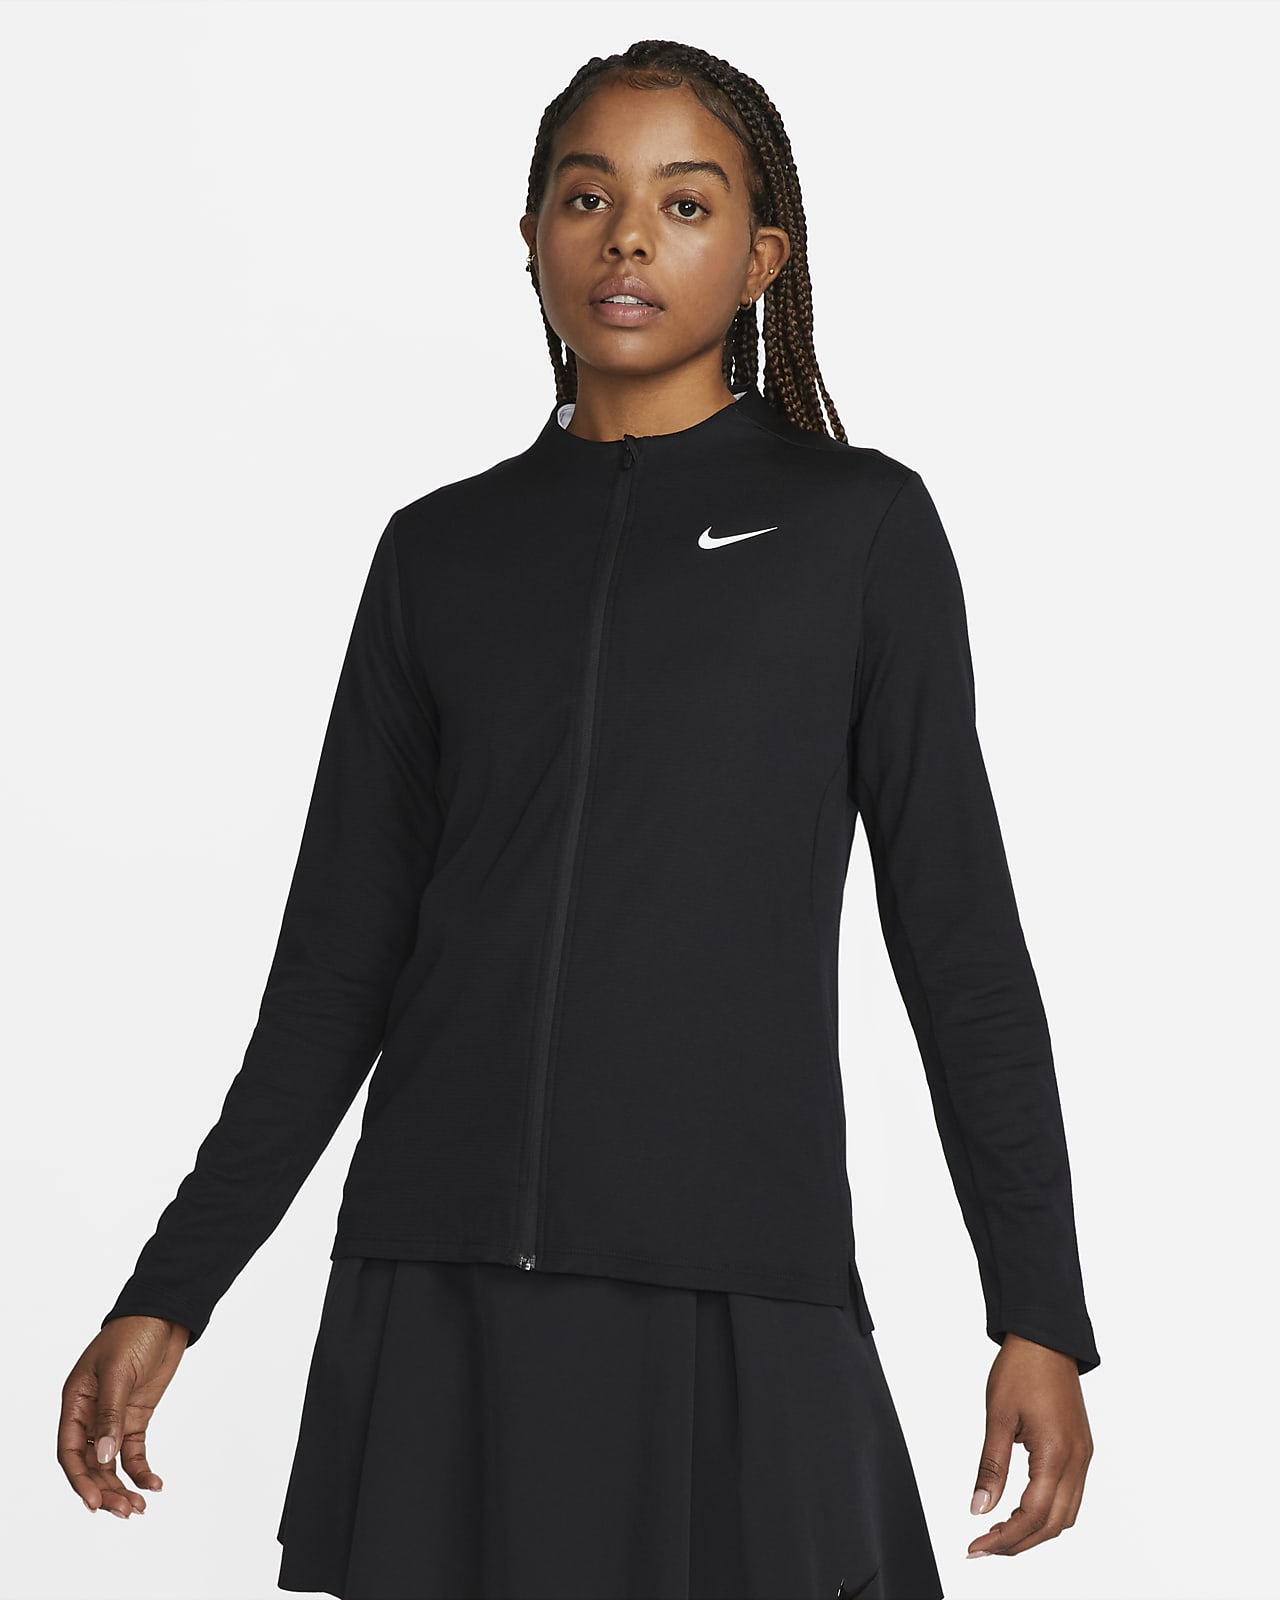 Nike Dri-FIT UV Advantage Women's Full-Zip Top. Nike LU